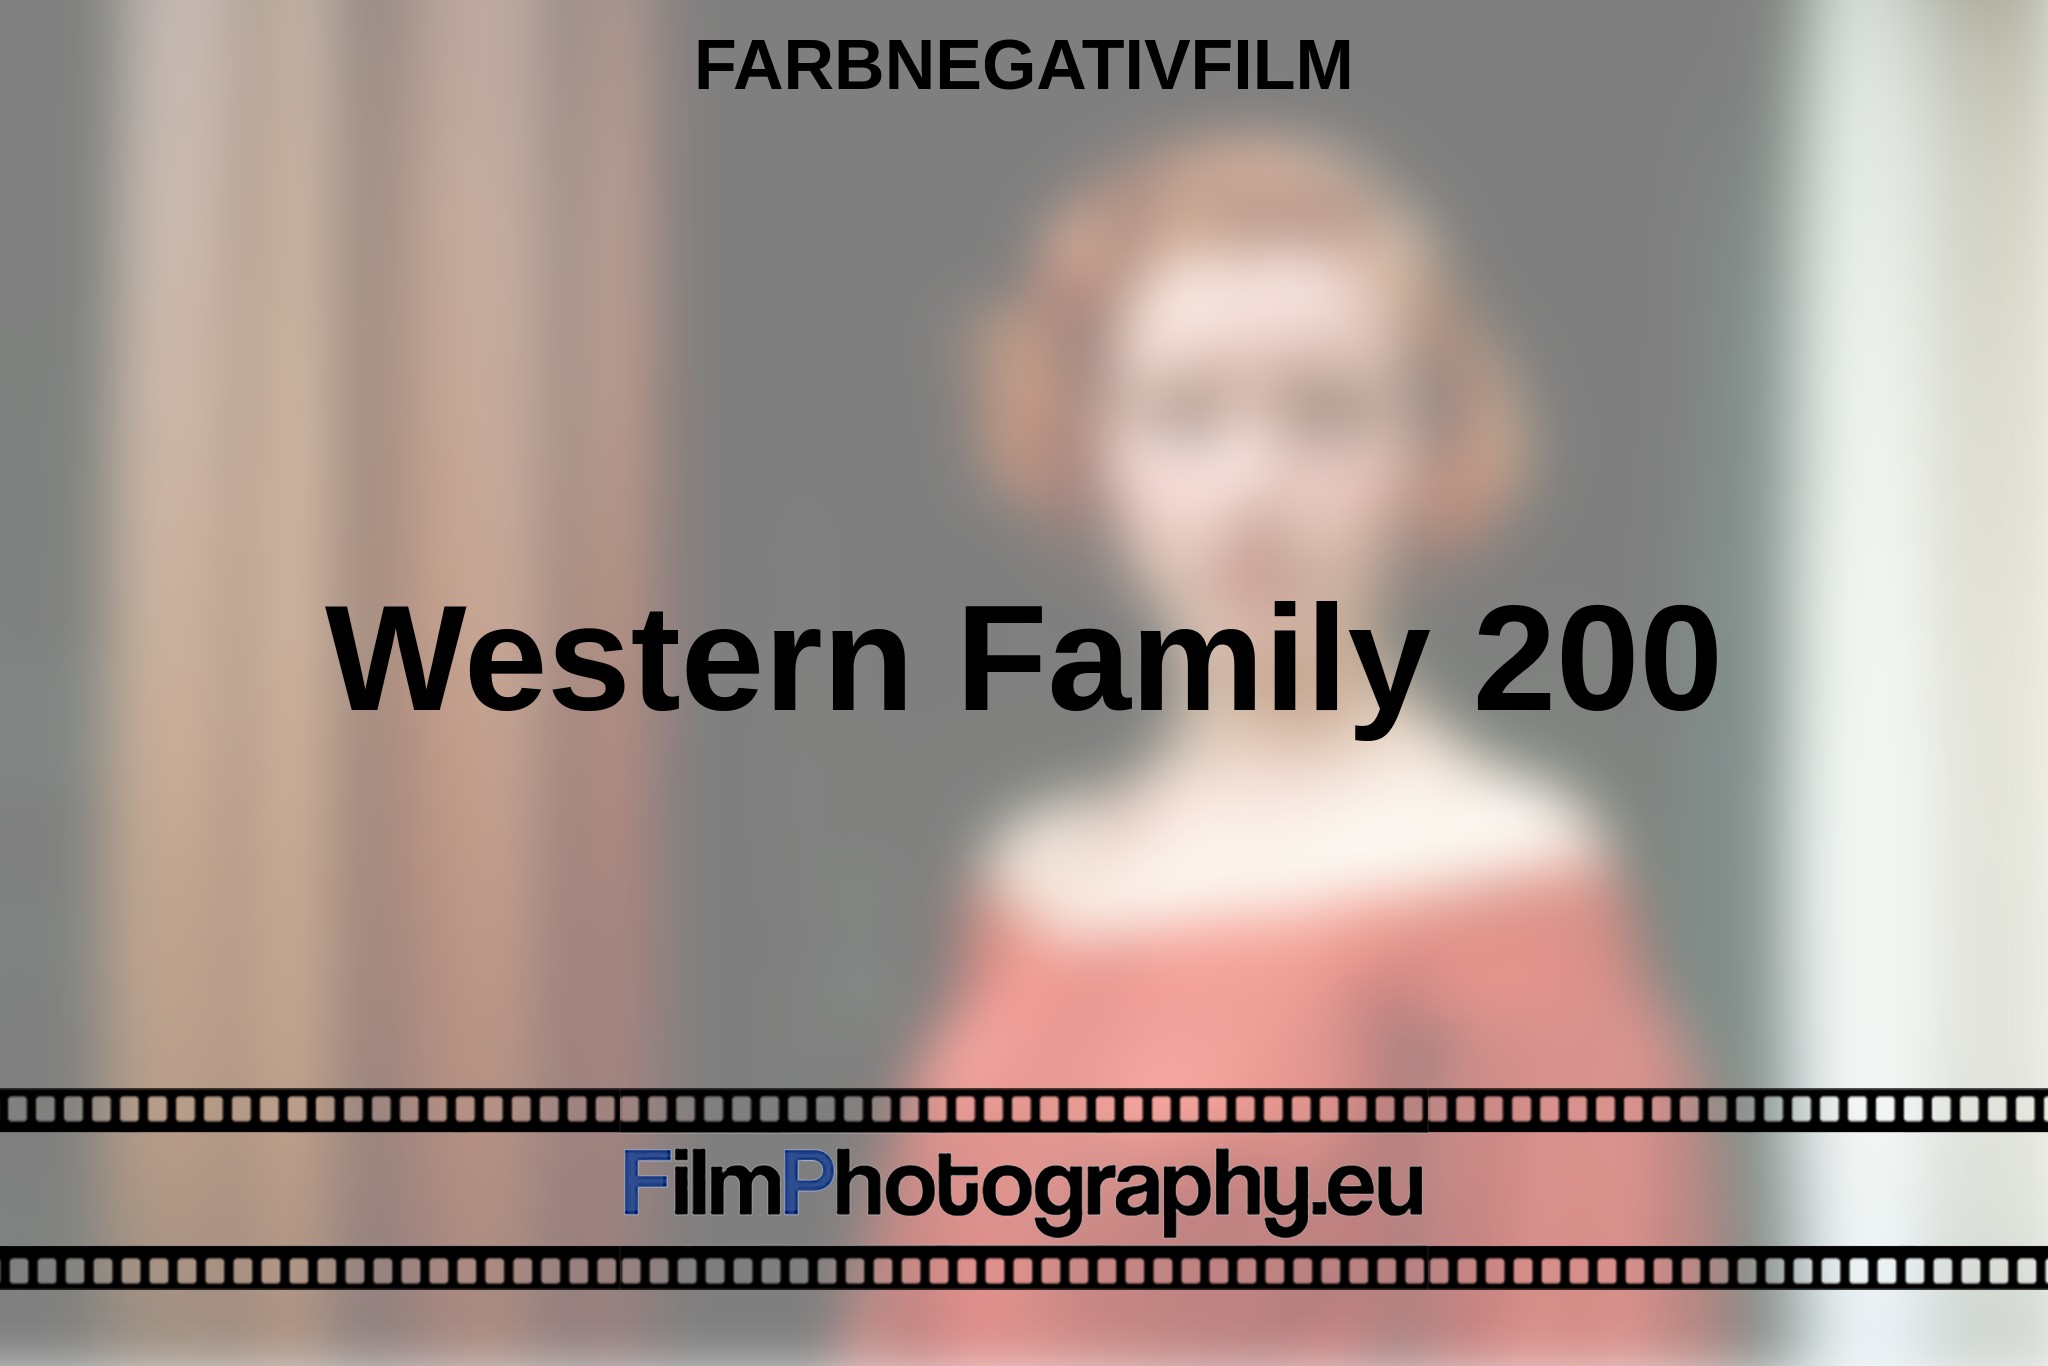 western-family-200-farbnegativfilm-bnv.jpg